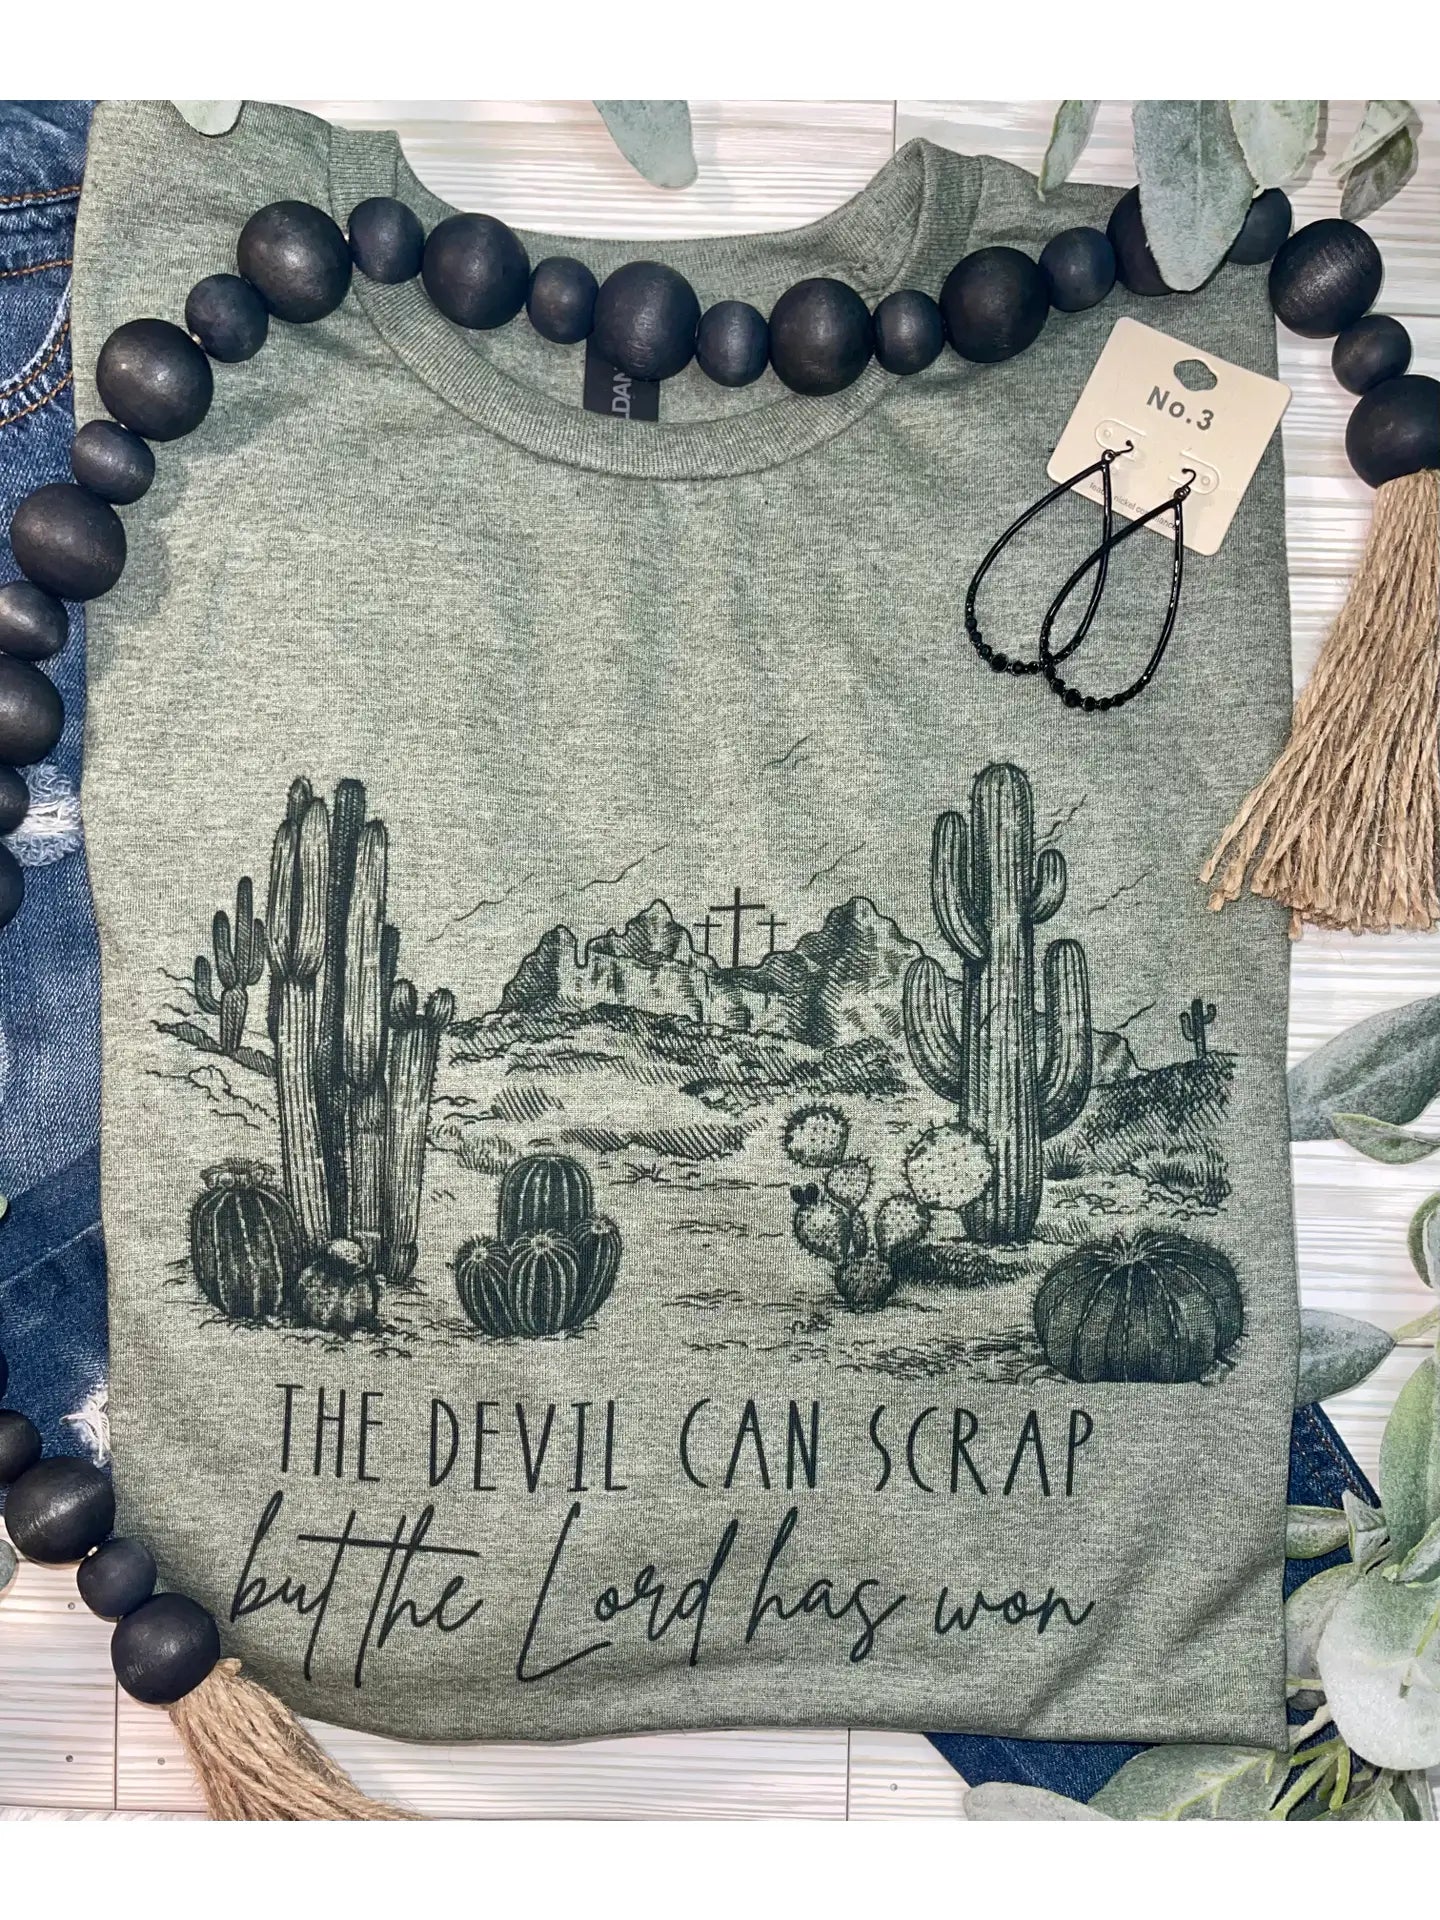 "The Devil can Scrap" T-shirt